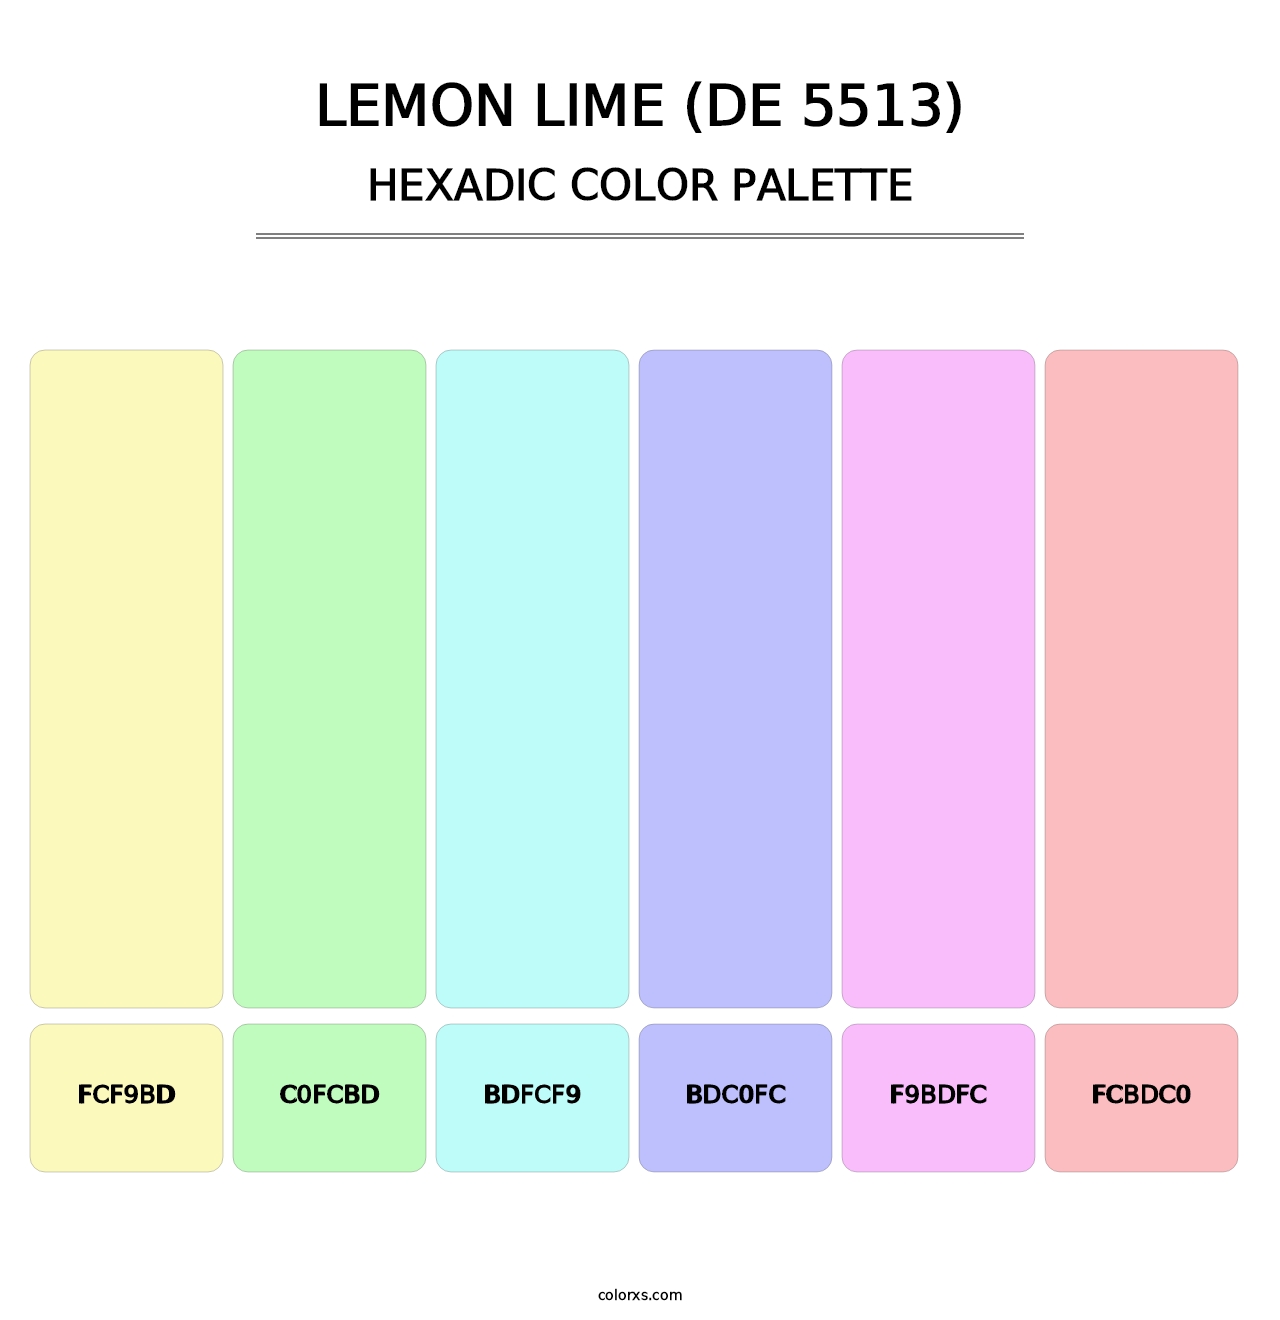 Lemon Lime (DE 5513) - Hexadic Color Palette